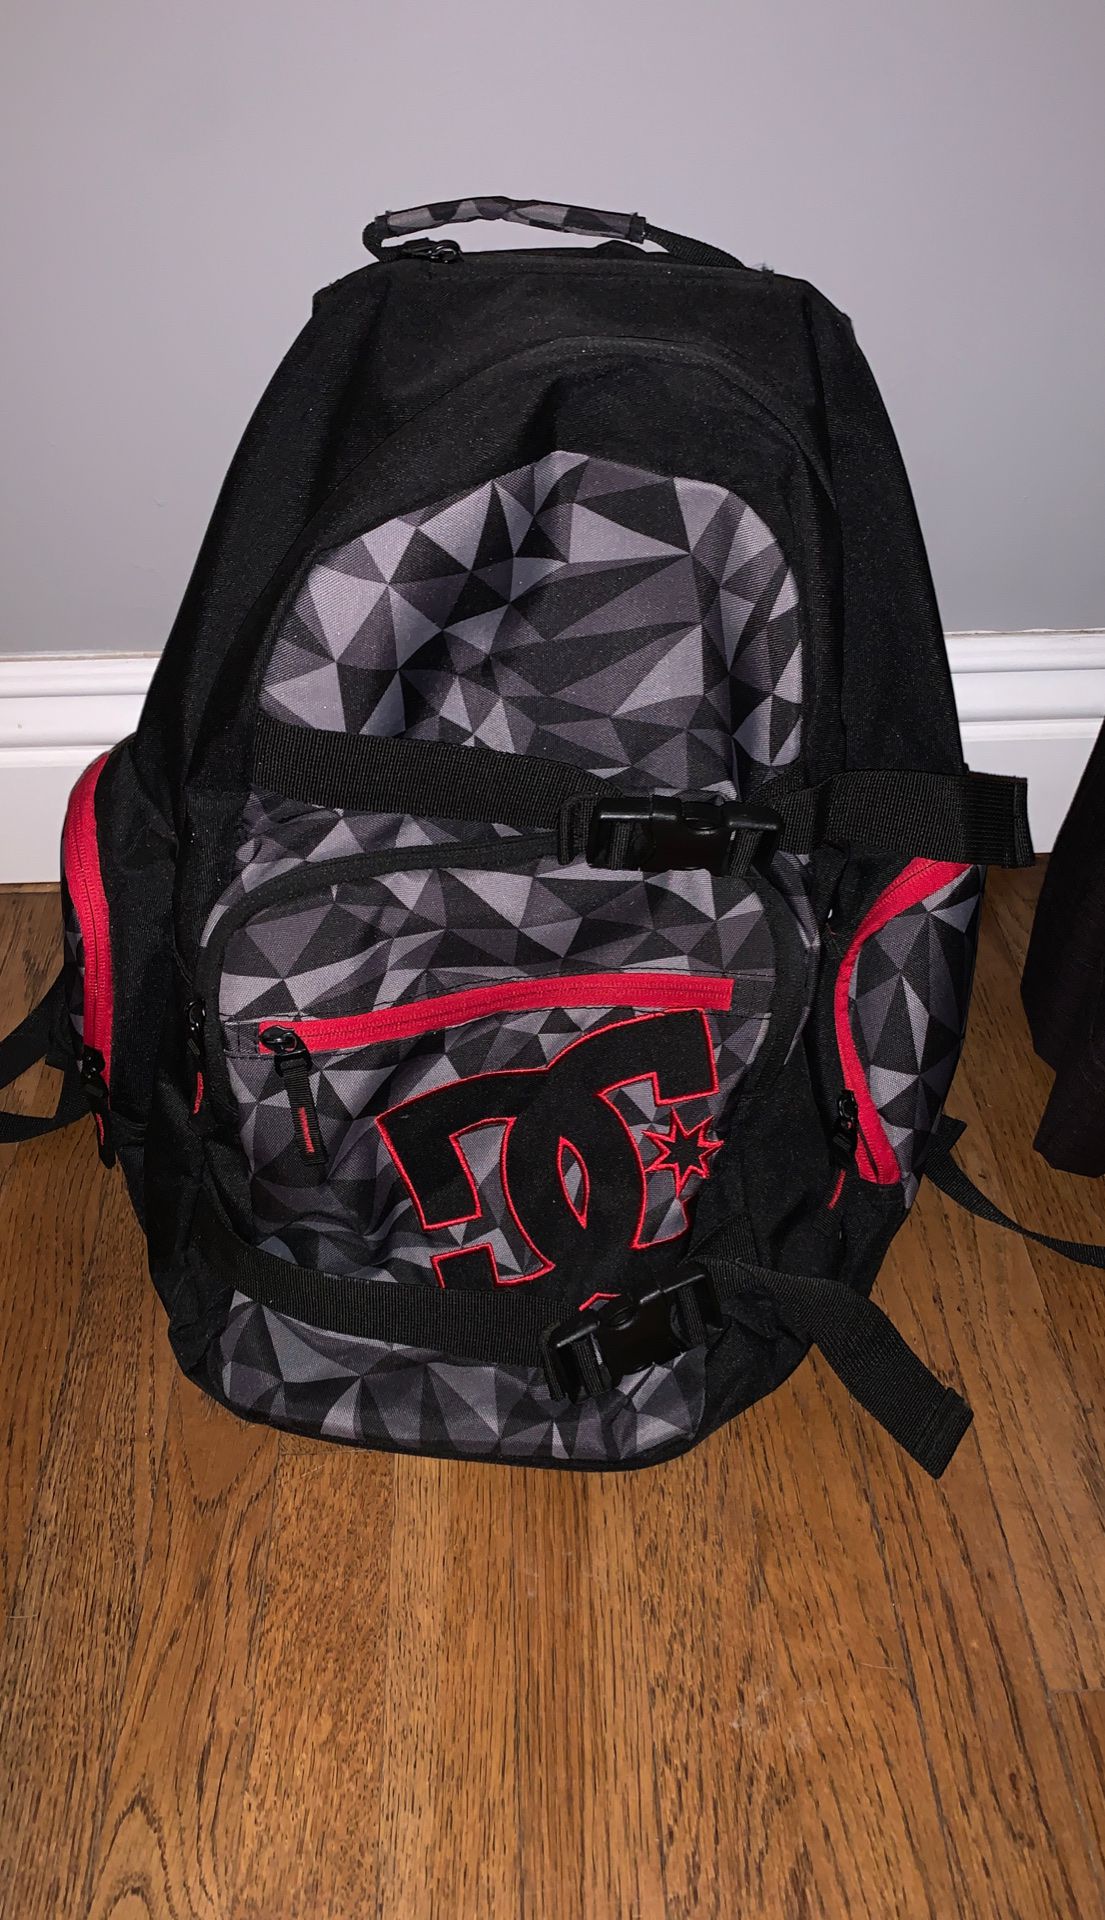 Free DC backpack